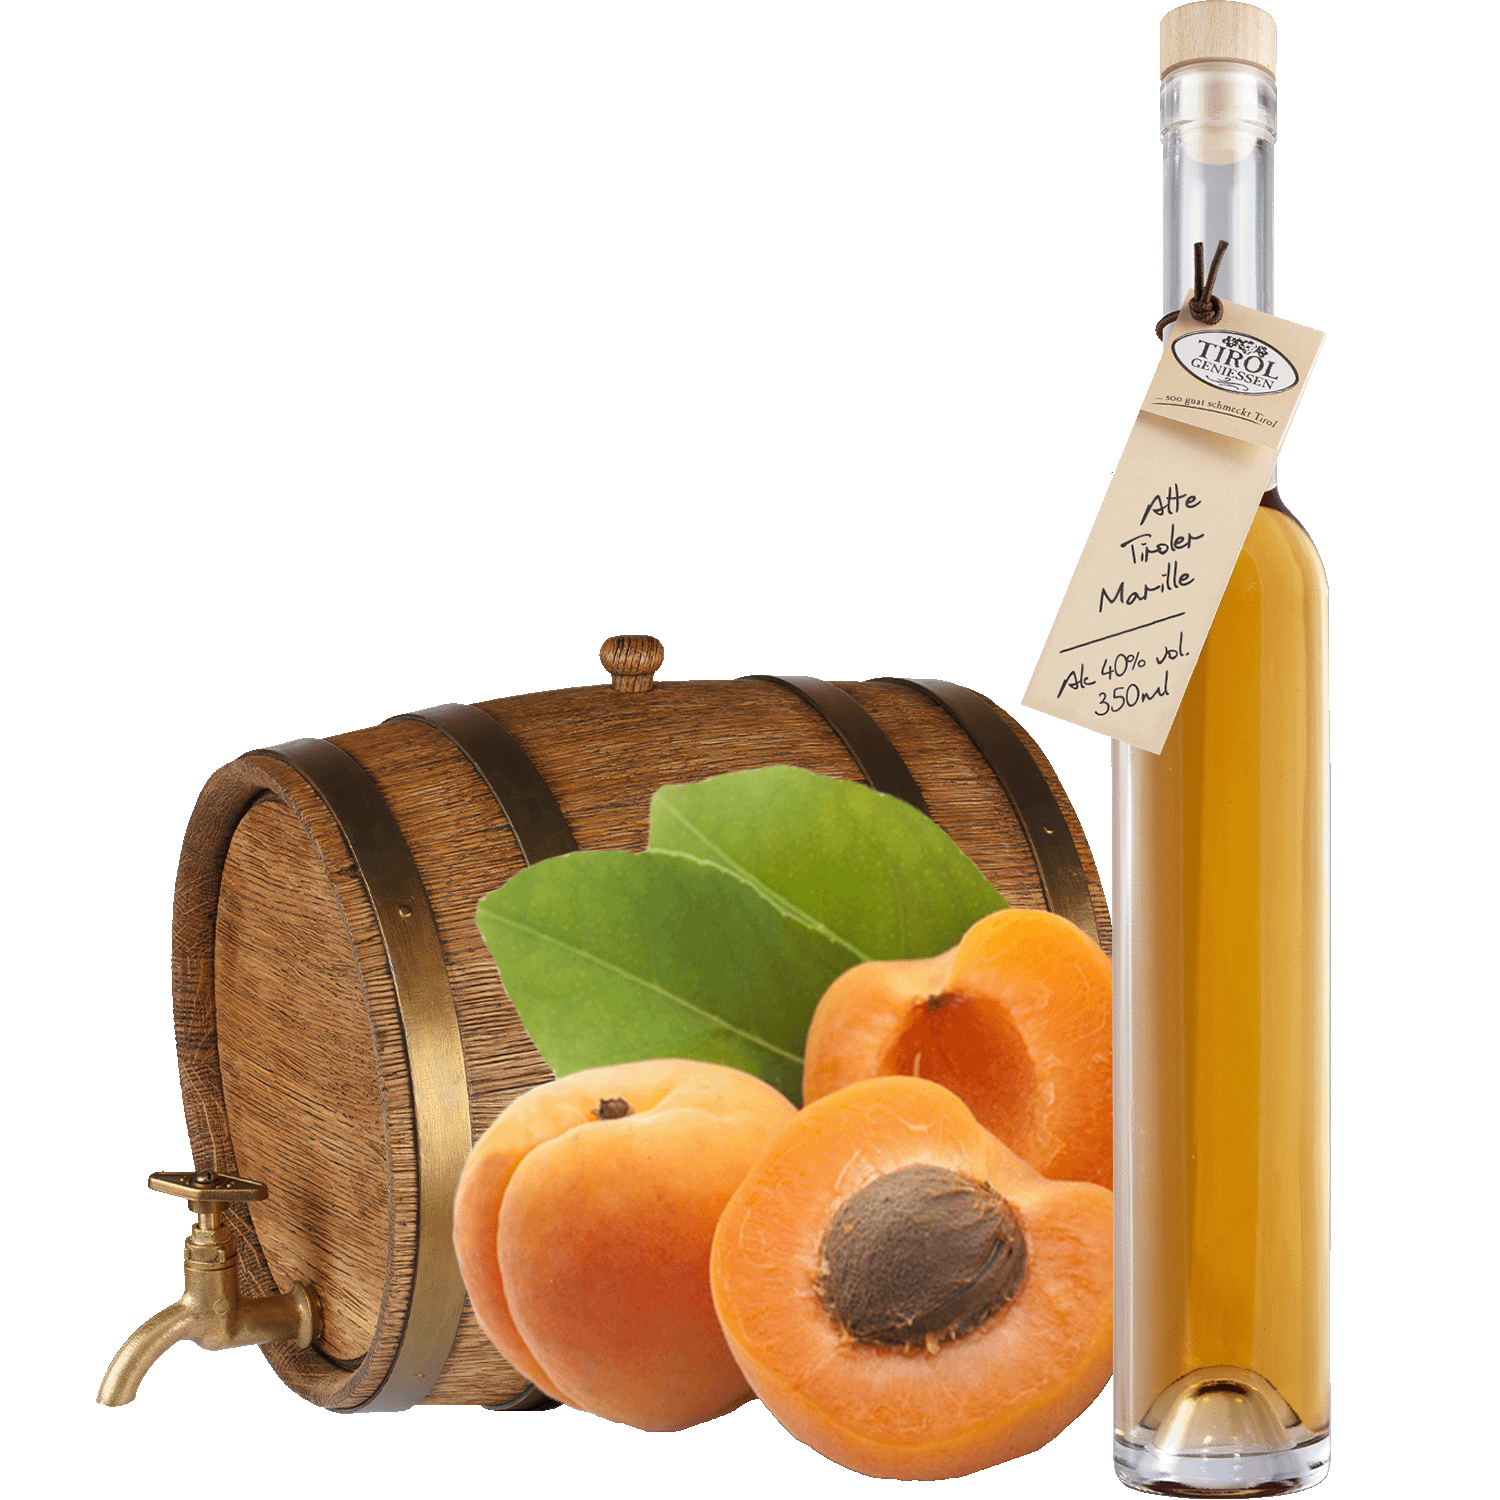 Old Apricot Spirit in gift bottle from Austria from Tirol Geniessen